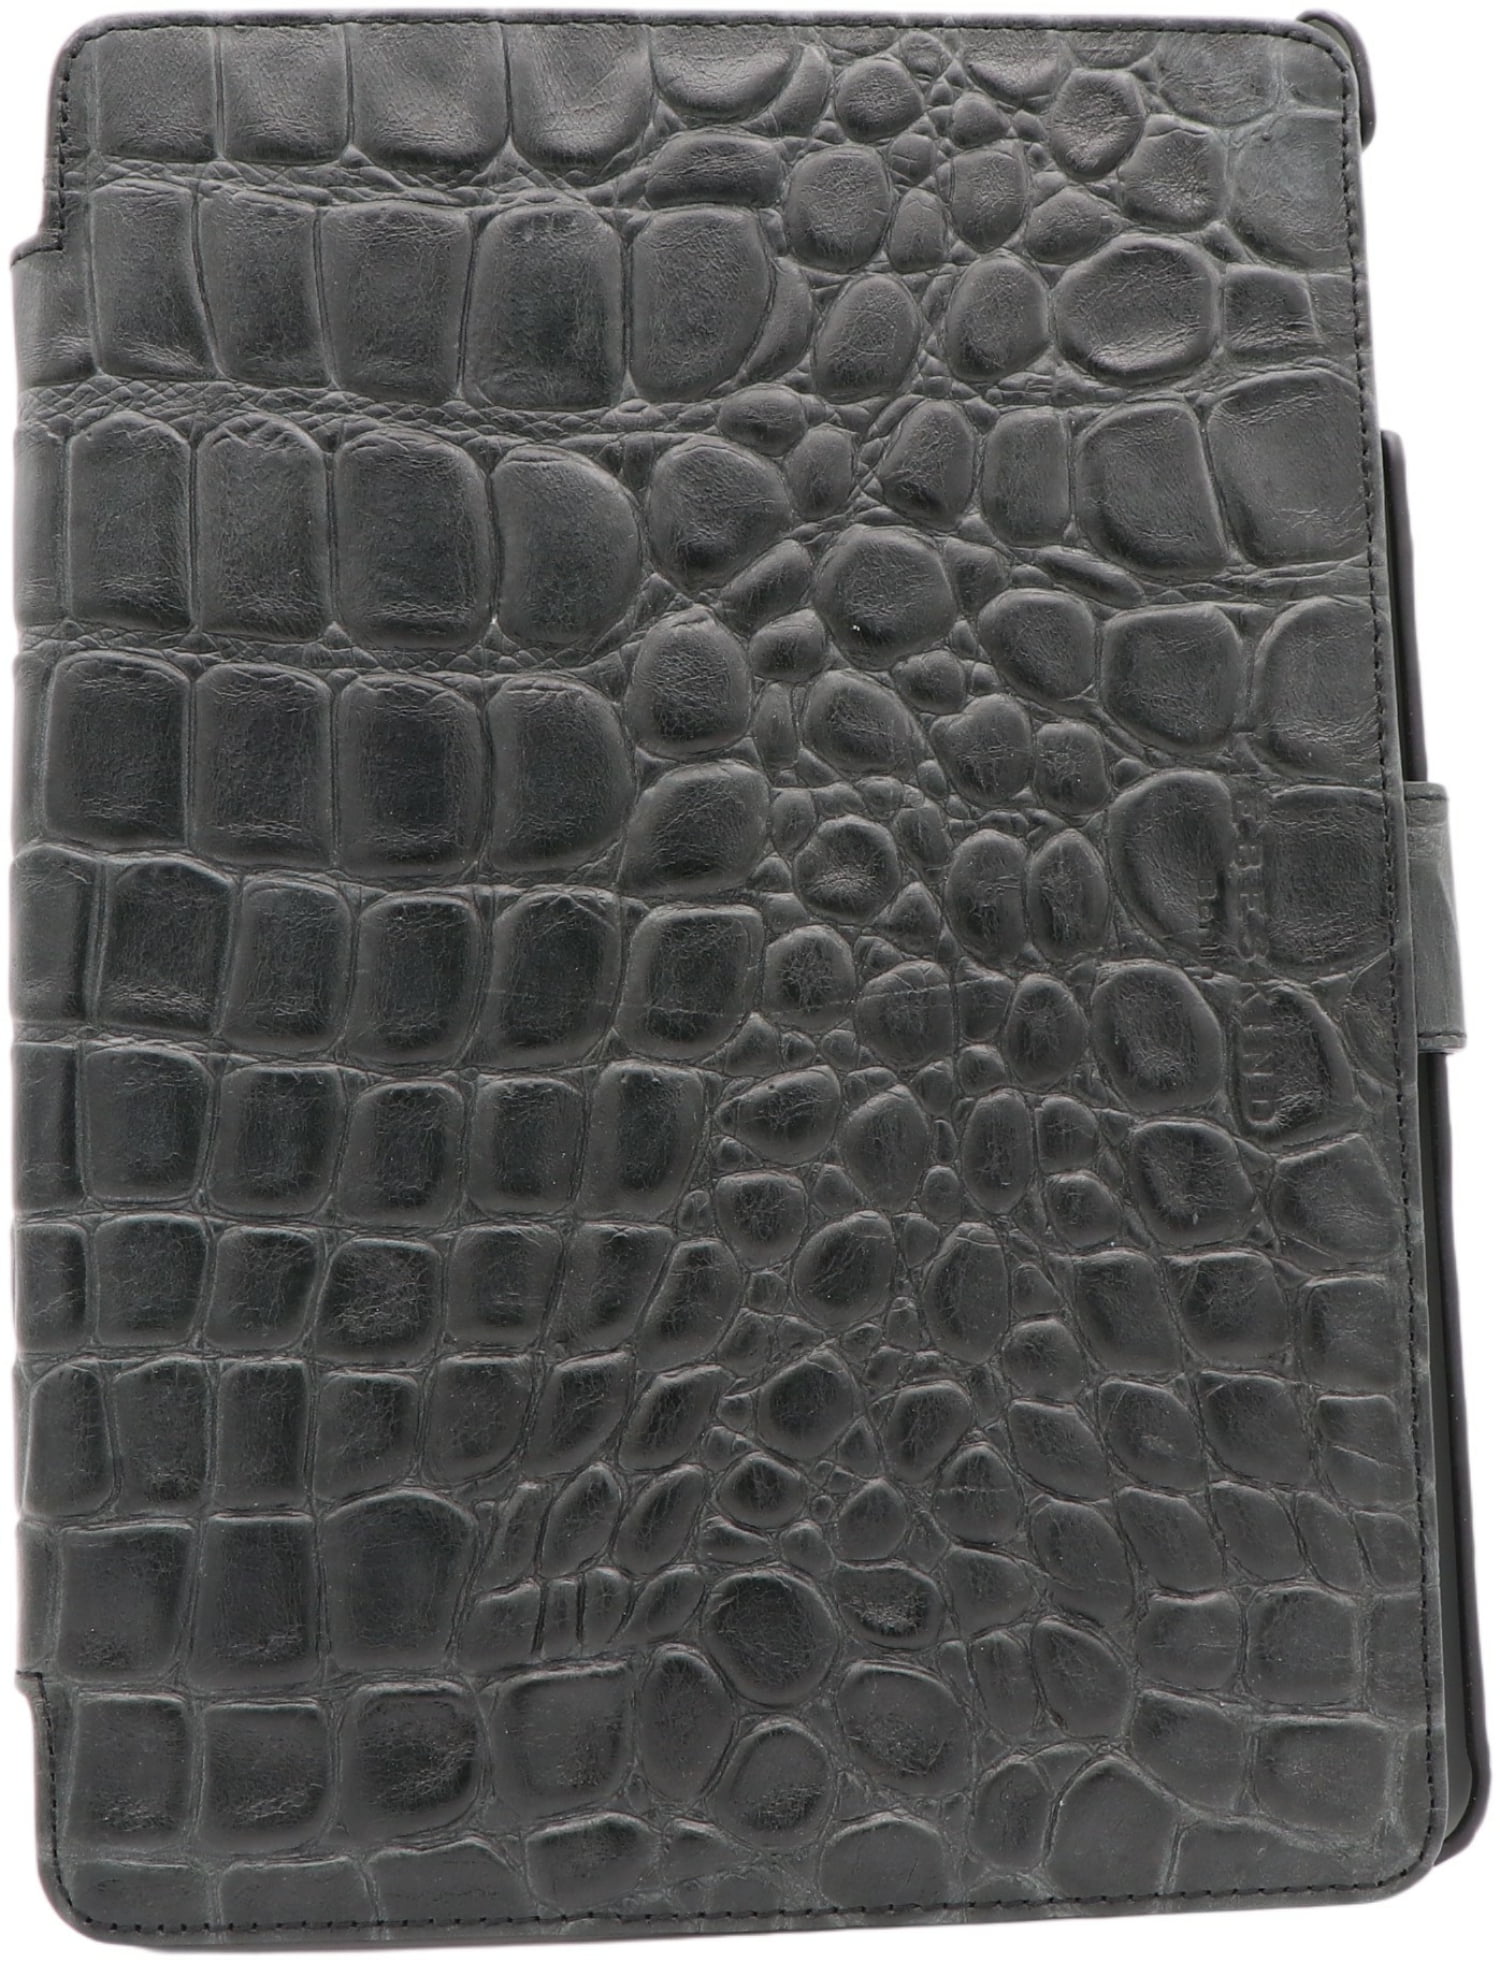 Burberry Black MN Coniston Protective iPad Case - Walmart.com